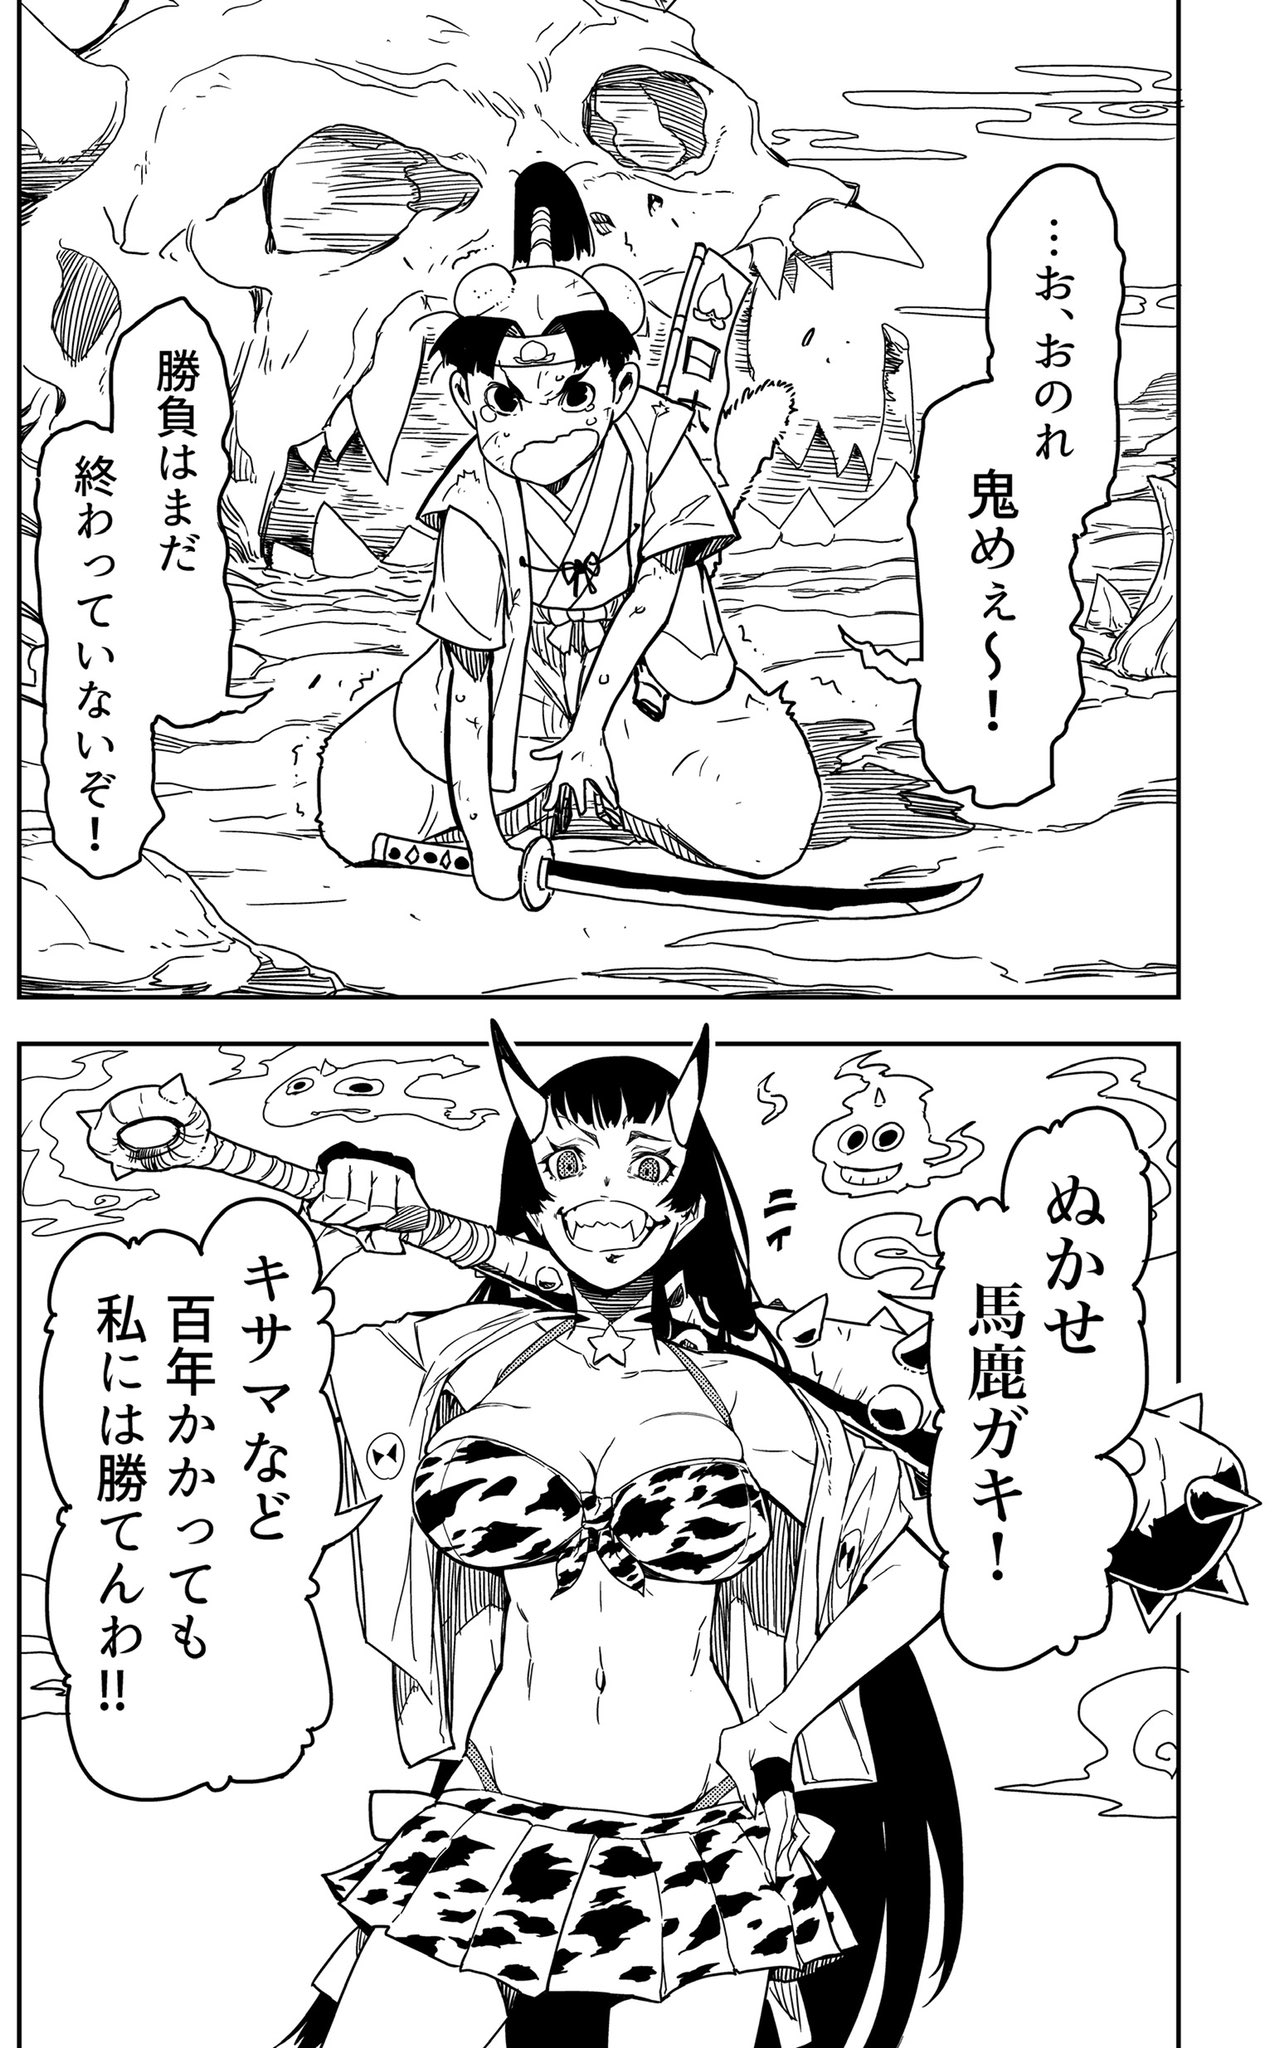 Momotarou and the Crimson Demon